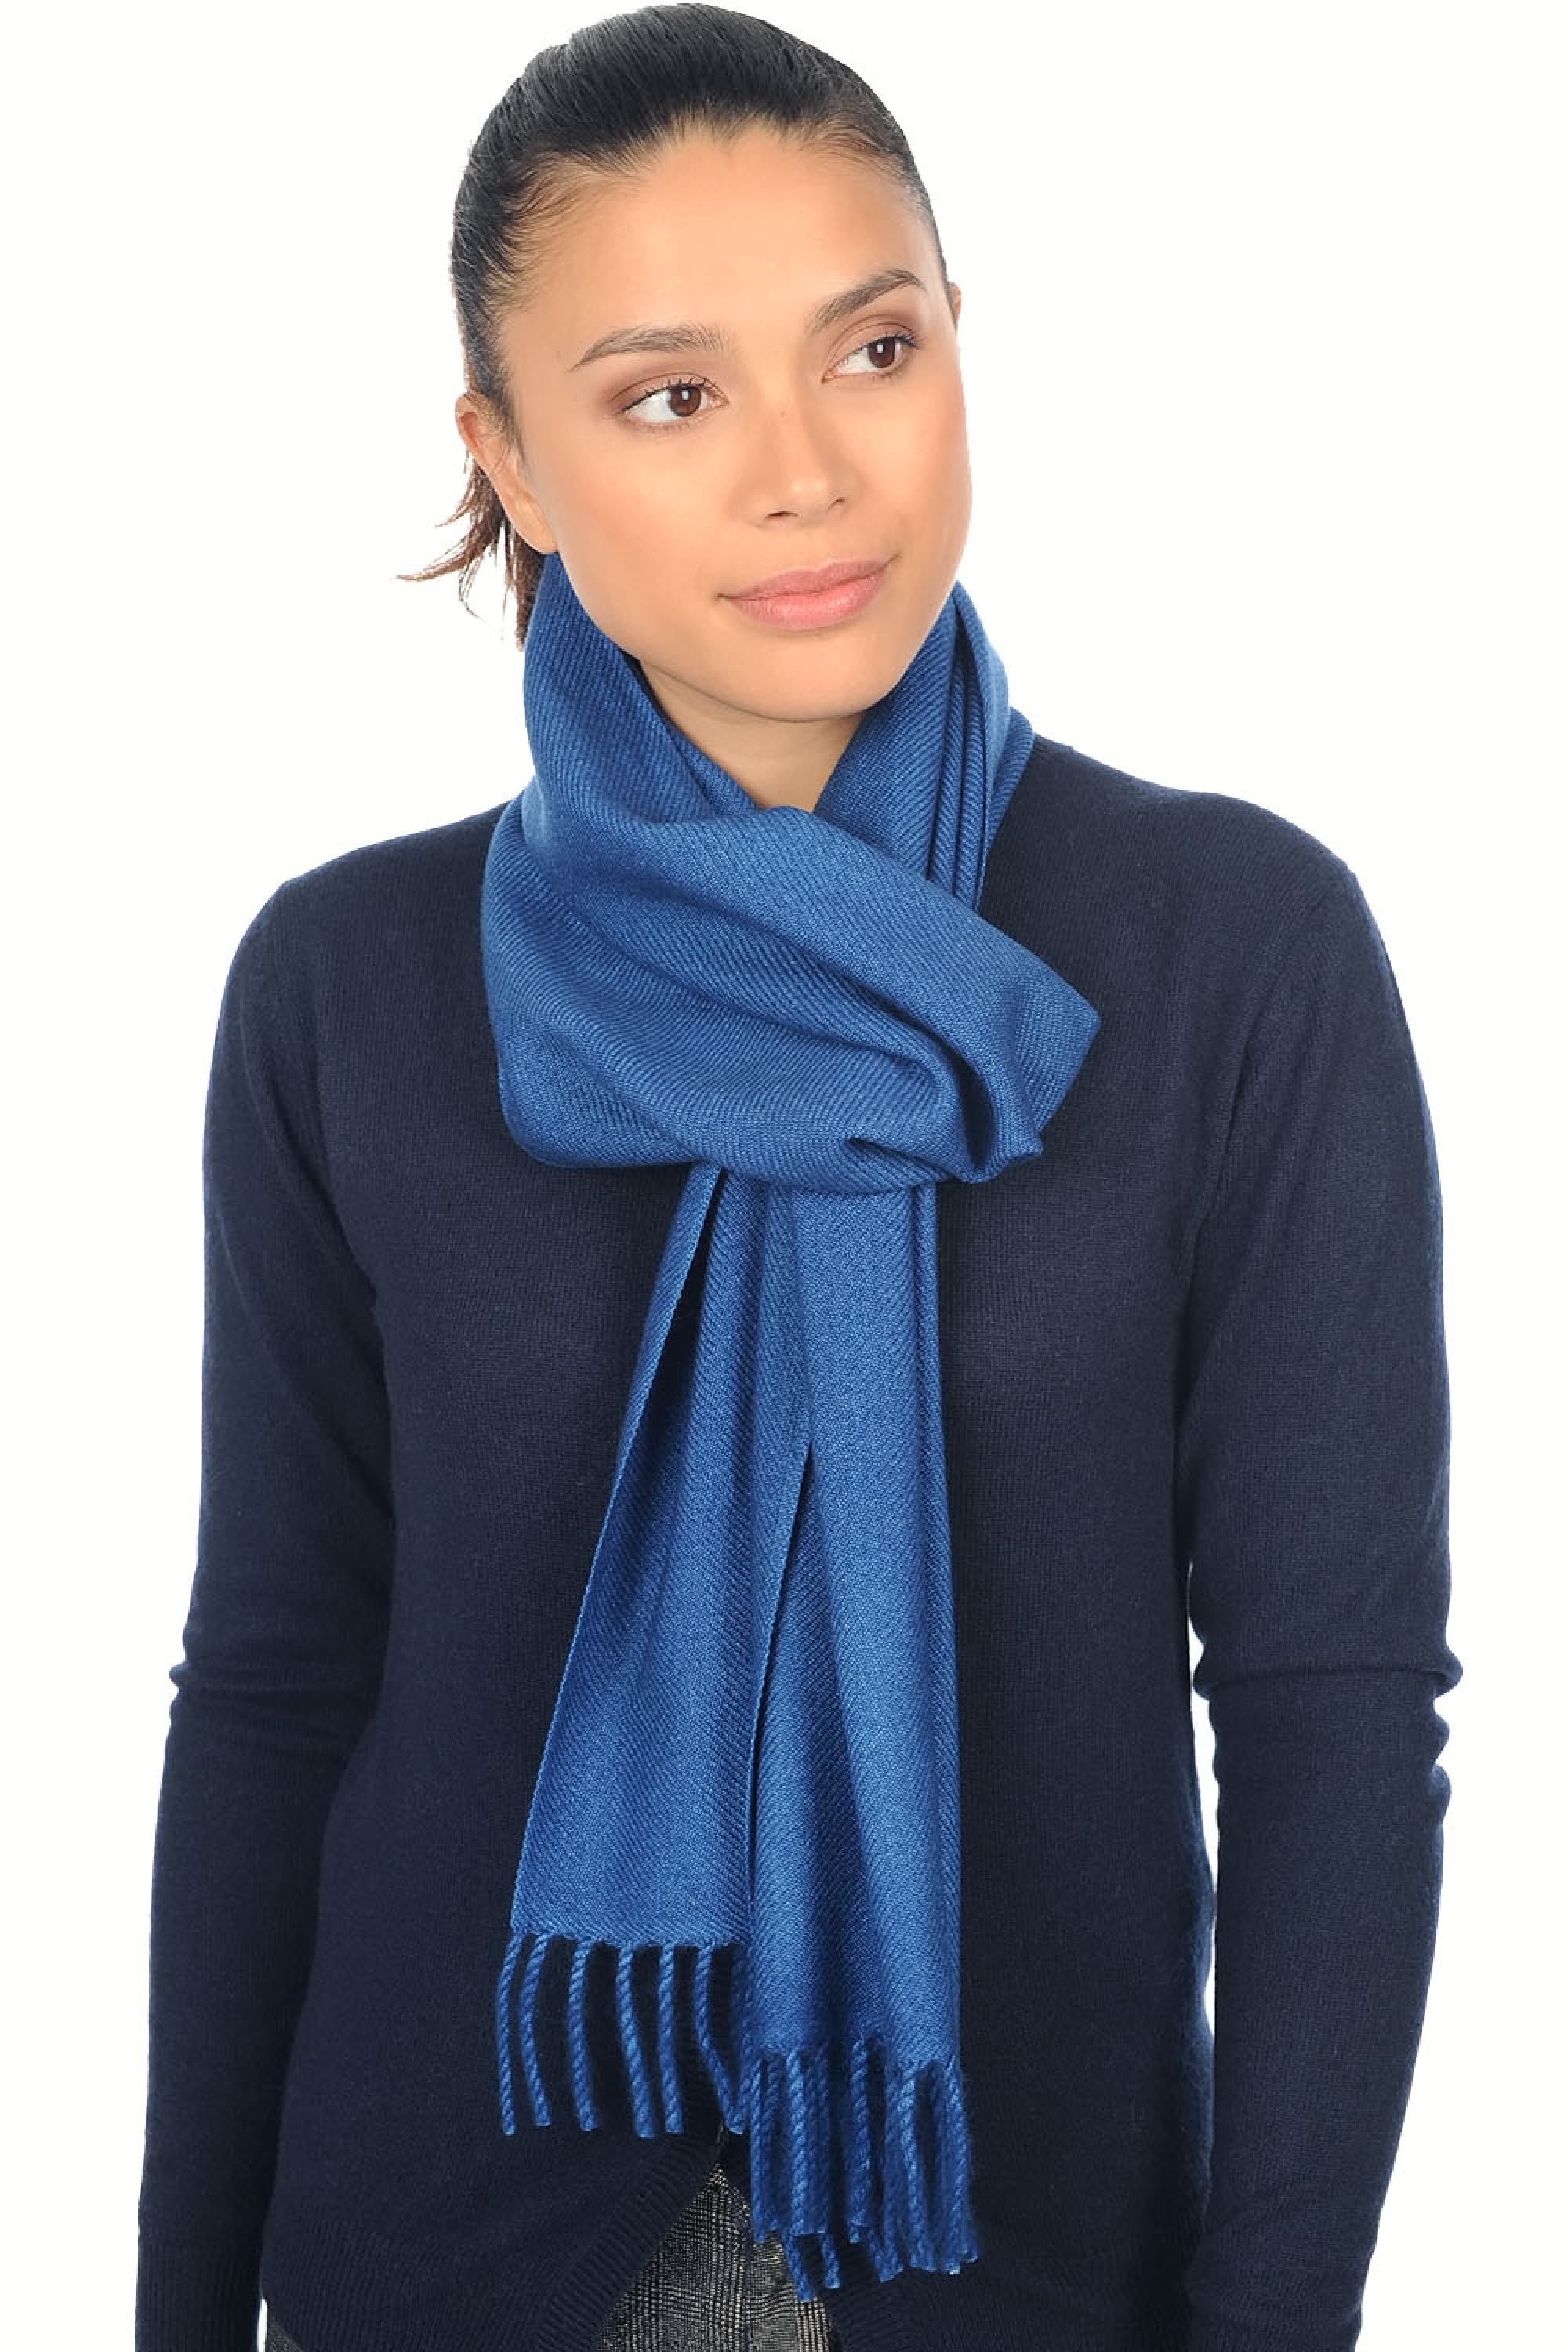 Cashmere accessories scarves mufflers kazu200 dark blue 200 x 35 cm